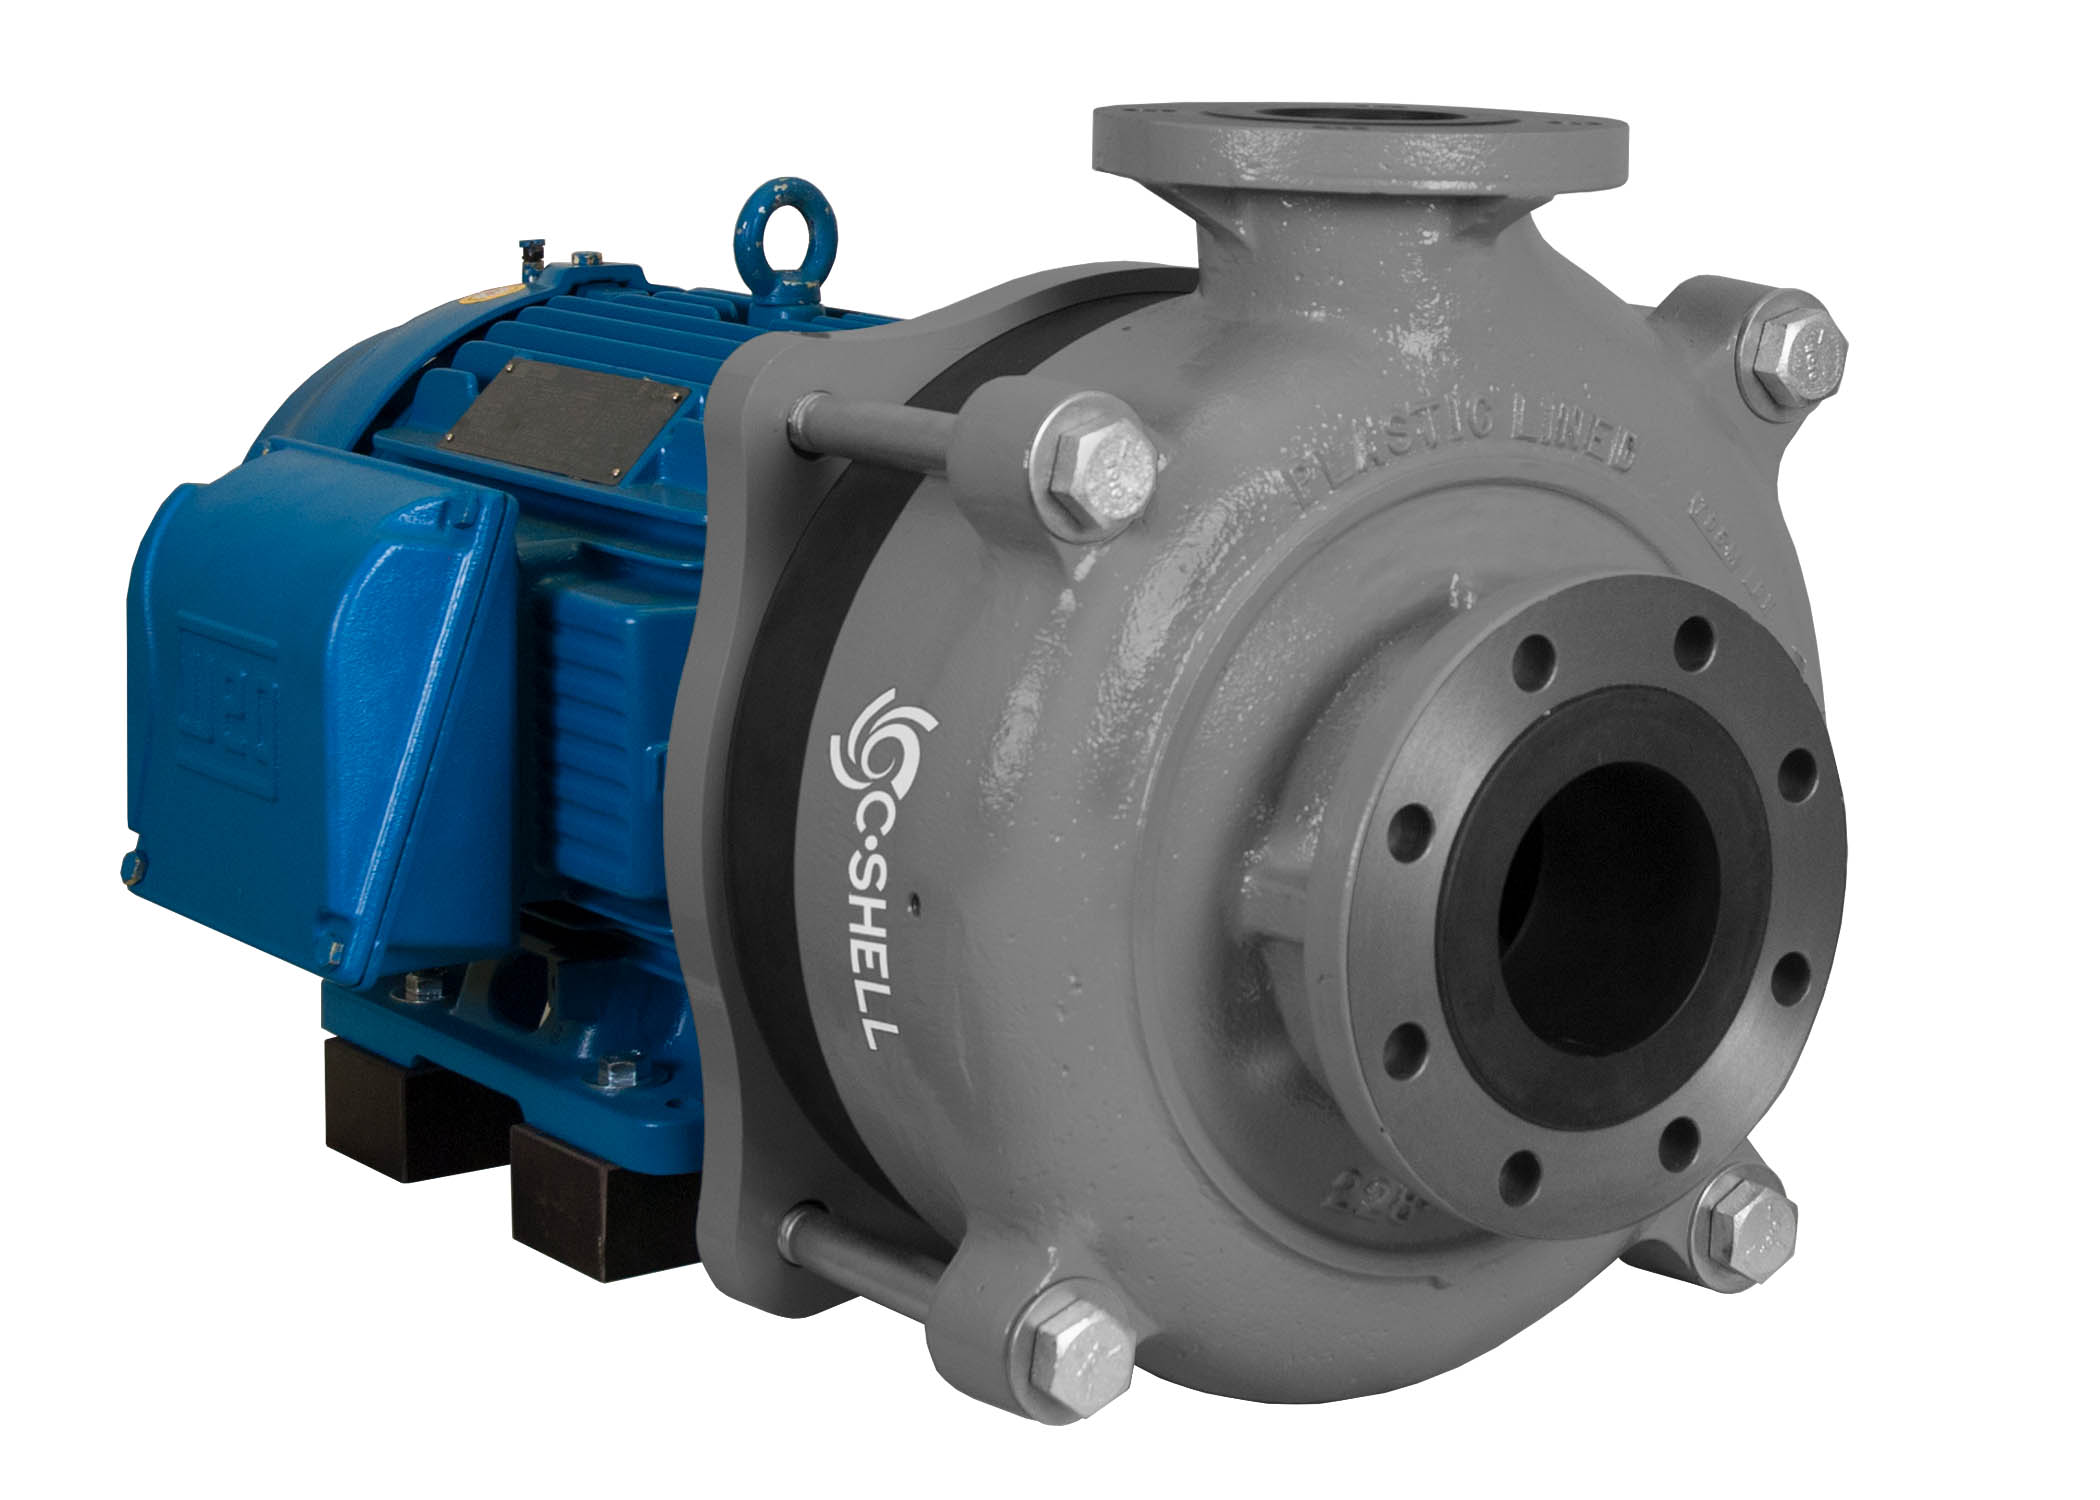 C-Shell 4x3-10 Pump with blue WEG Motor left angle view